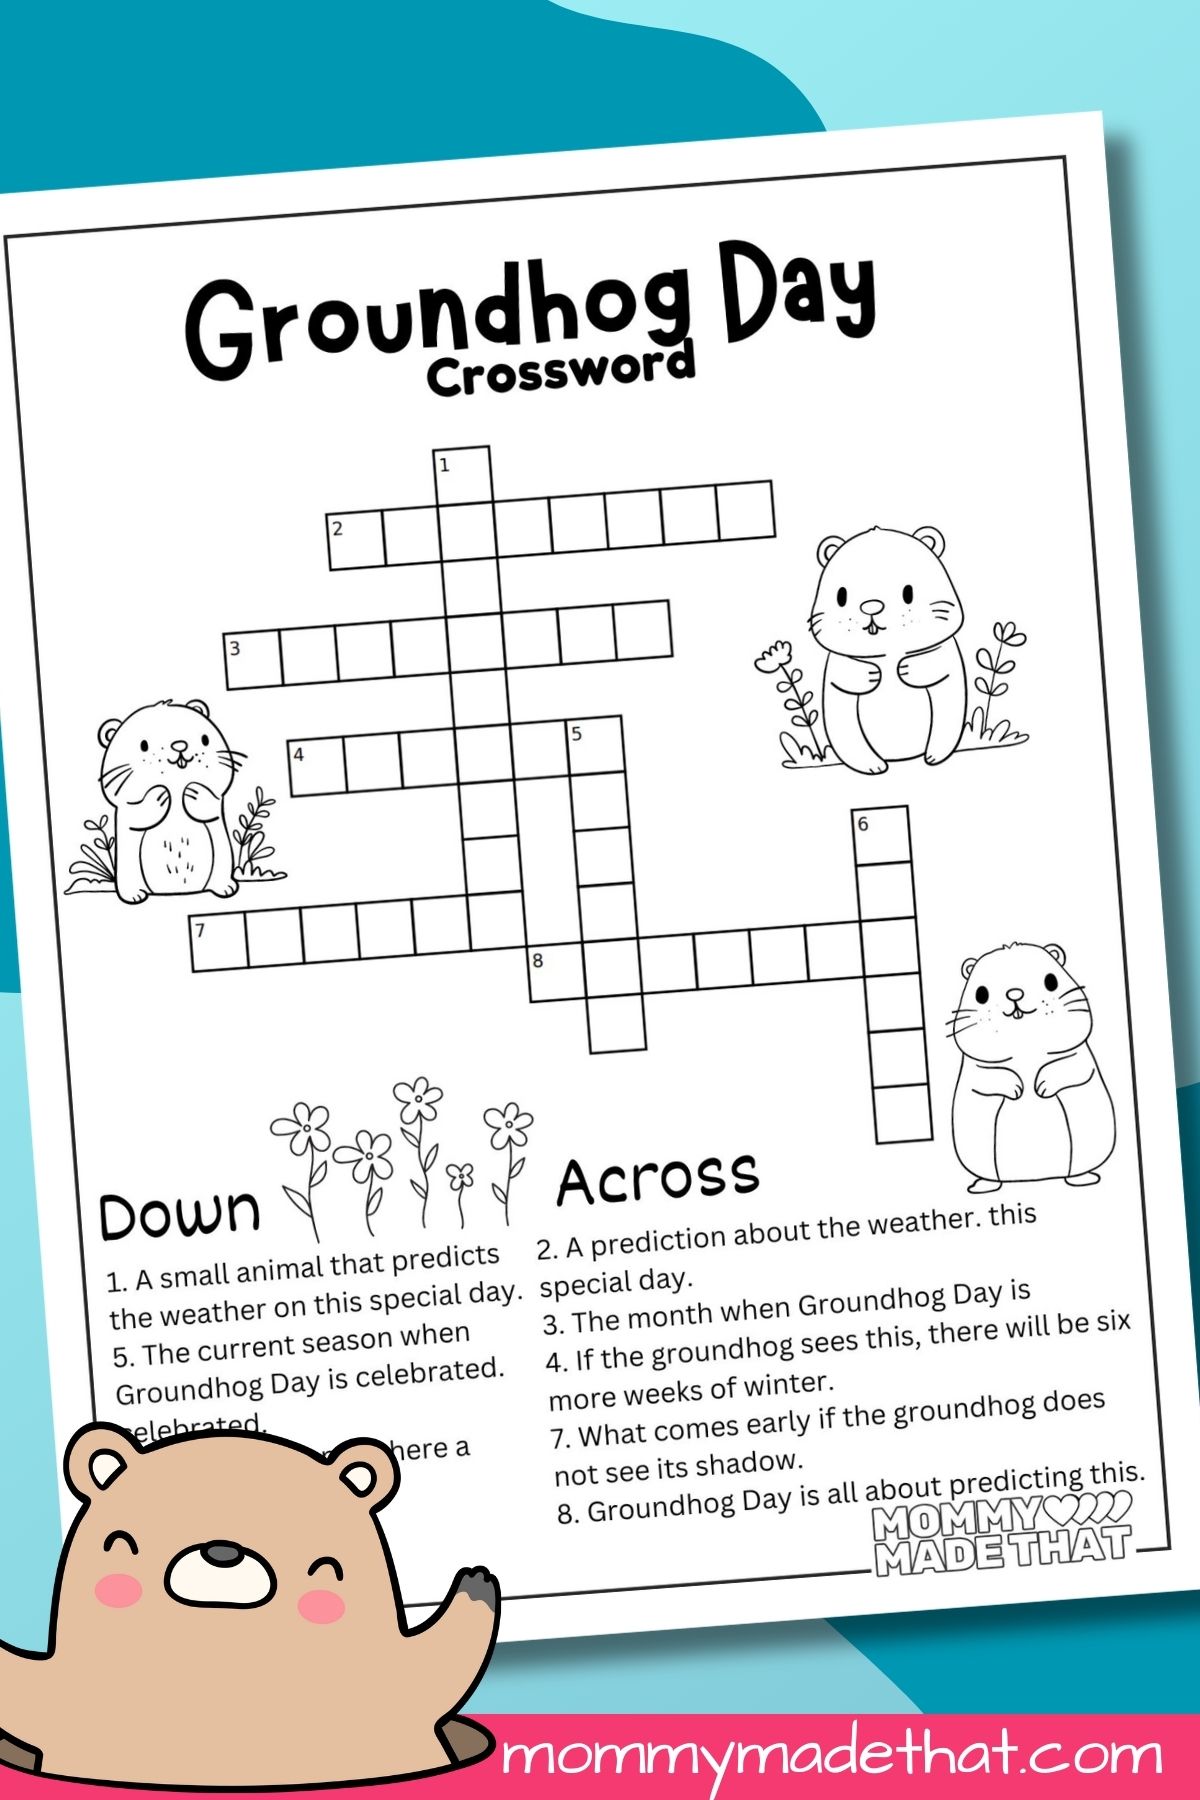 Free printable Groundhog day crossword puzzle.